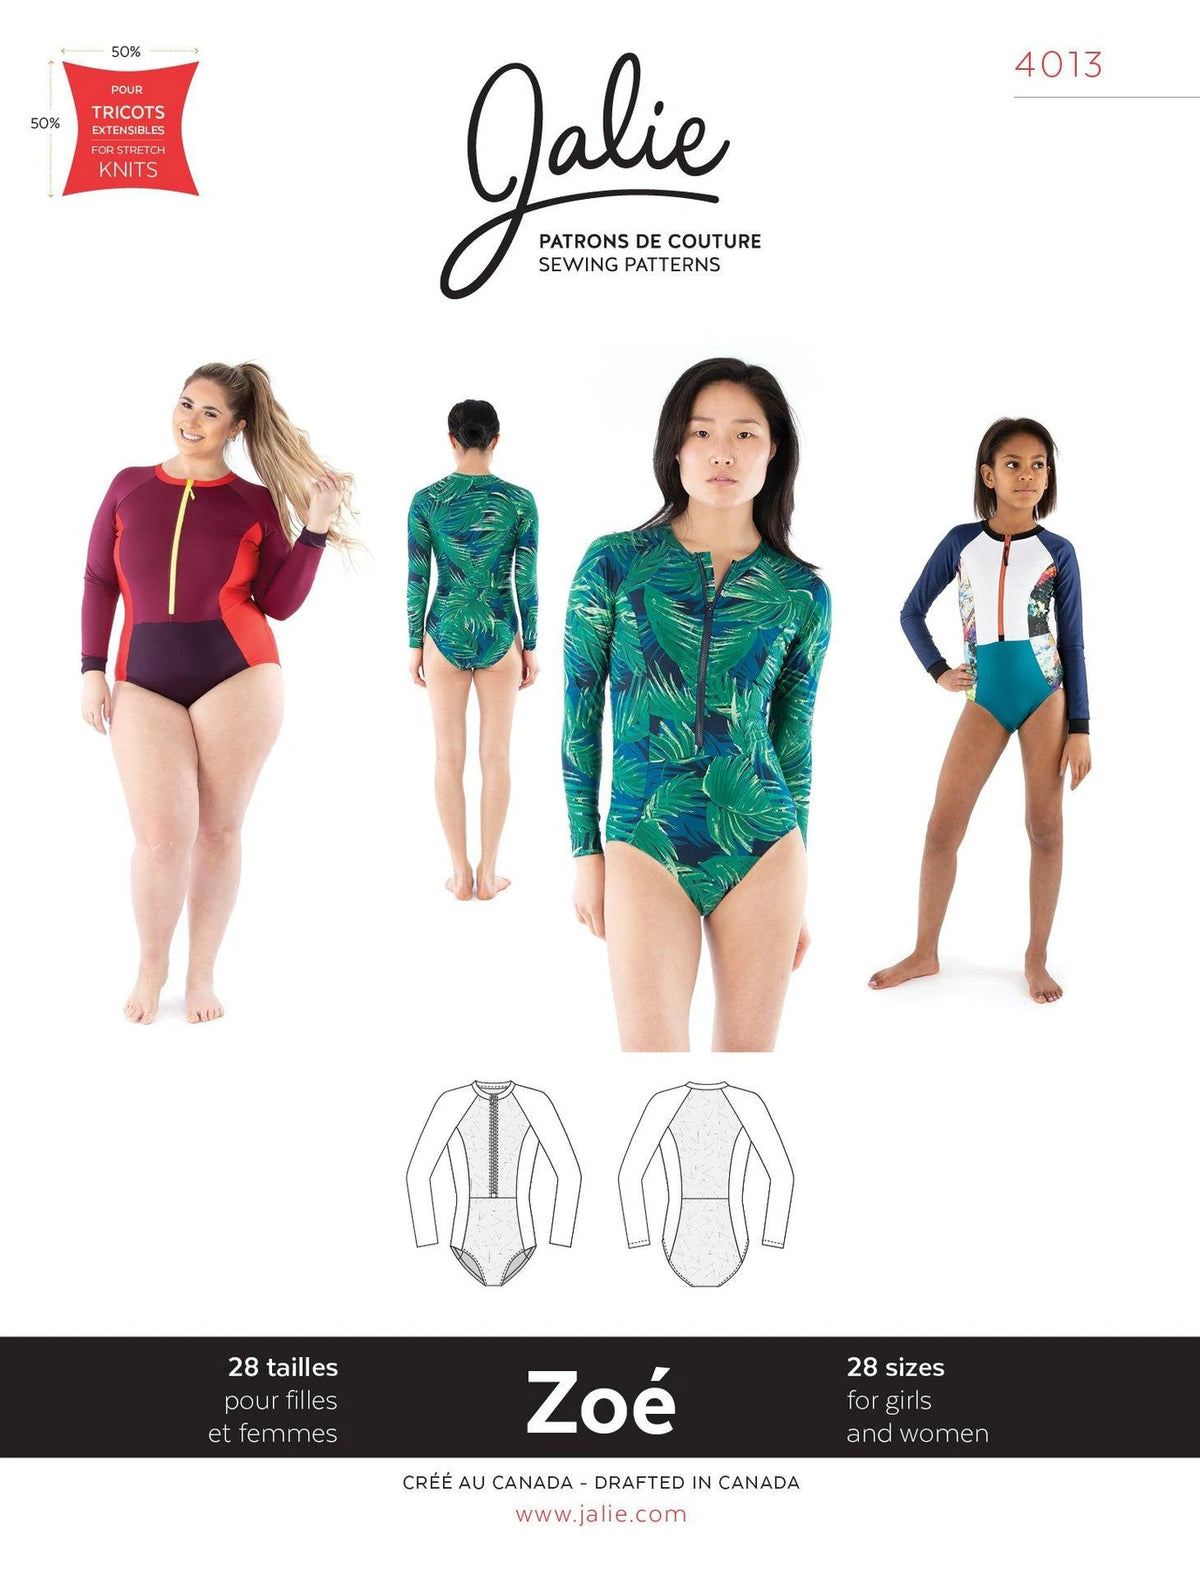 ZOE Long-Sleeve Rashguard Swimsuit by Jalie Patterns - Children and Adult Sizing